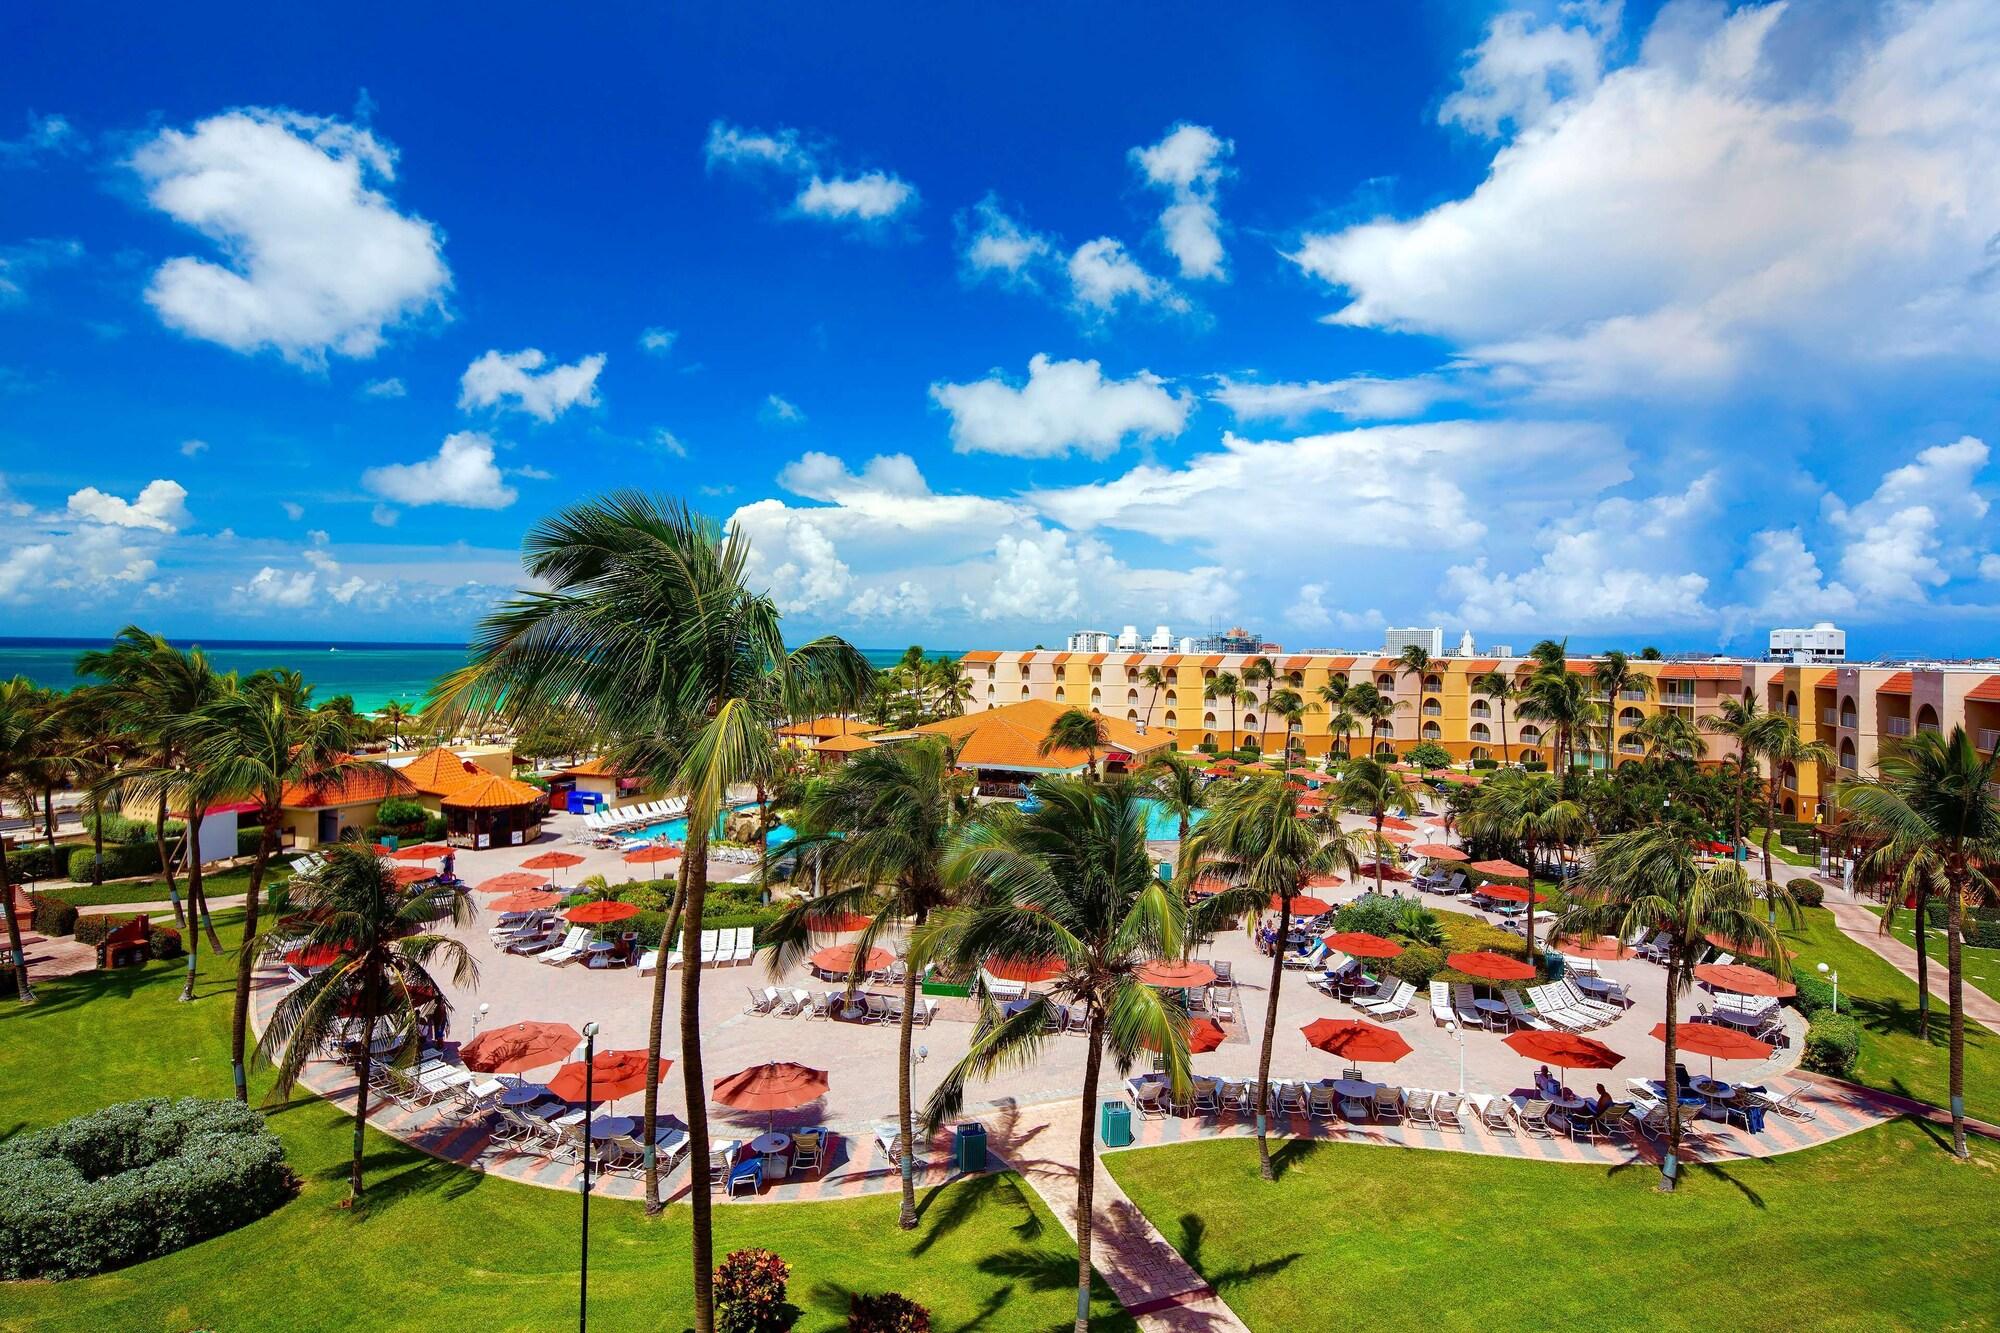 Vista da fachada La Cabana Beach Resort & Casino